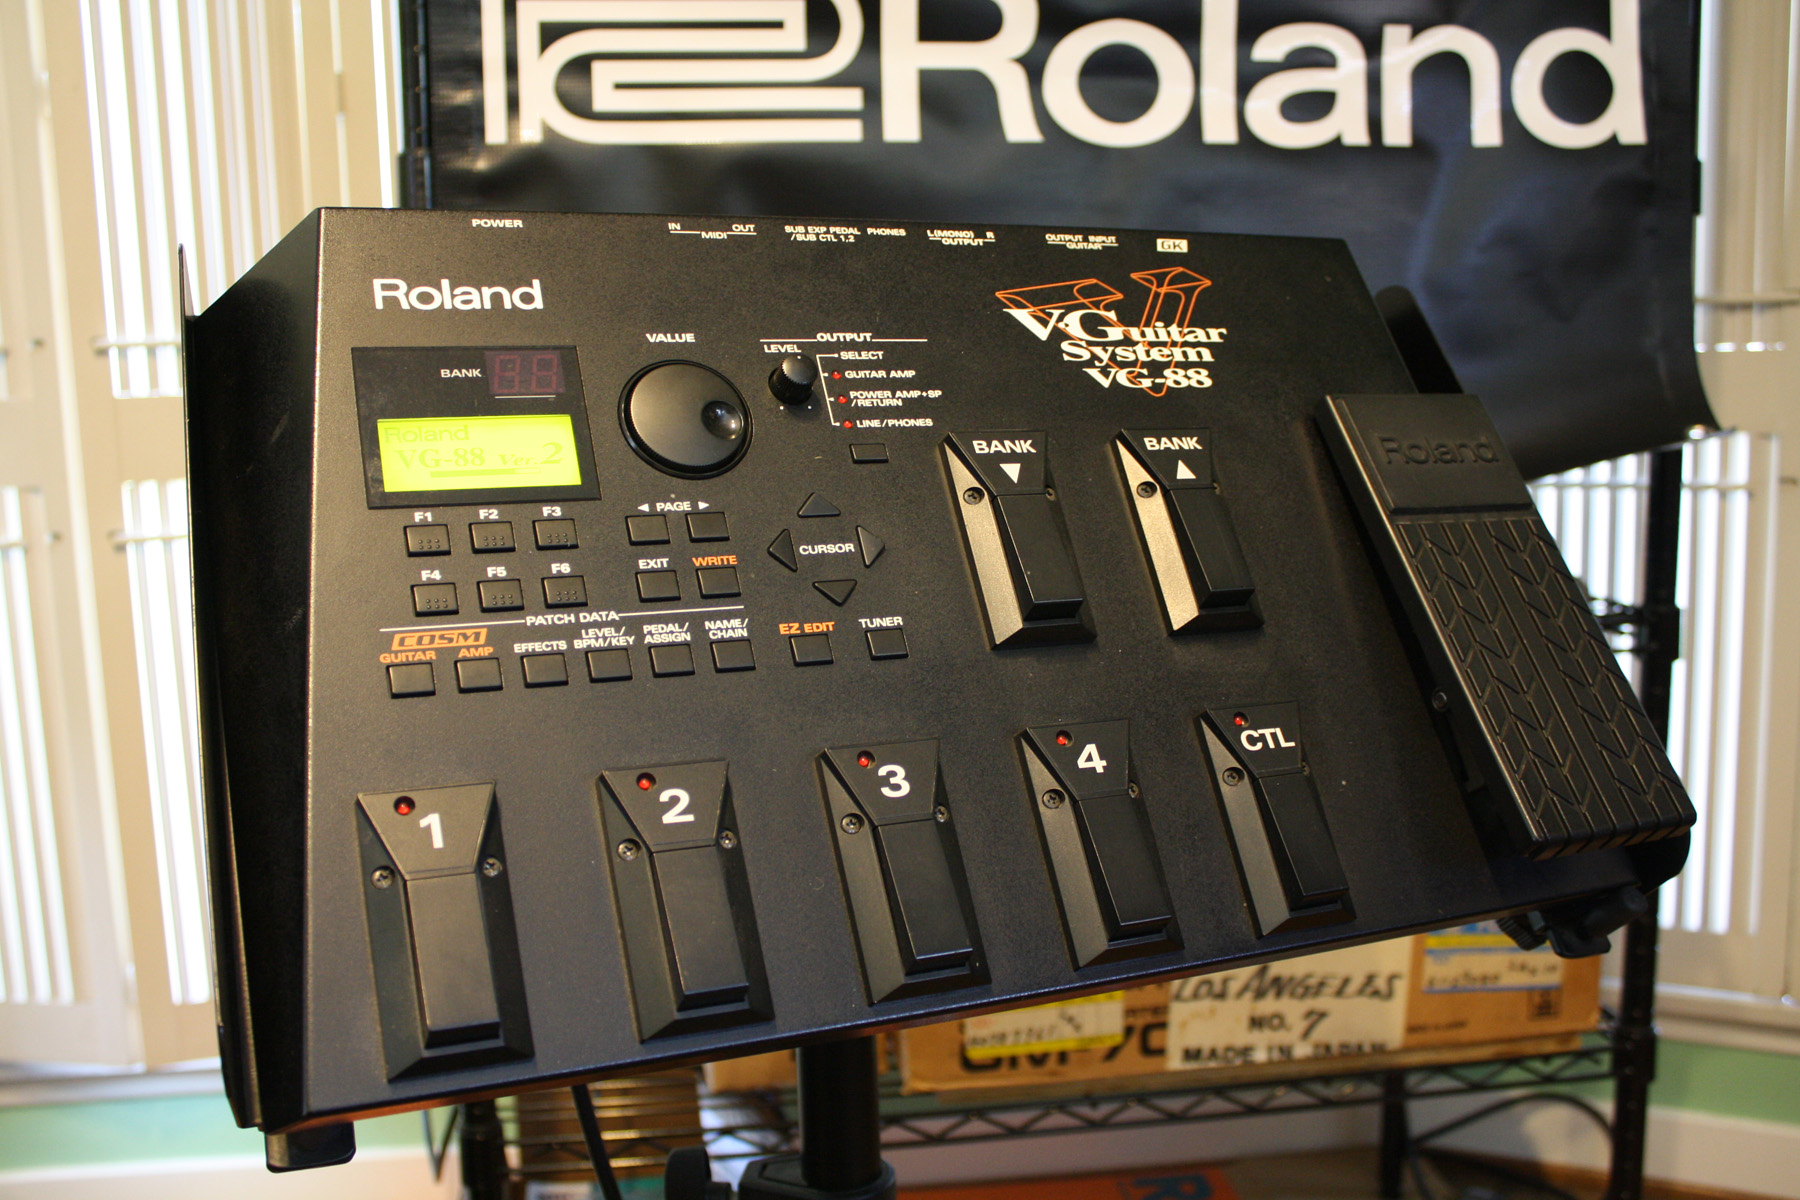 Download sound roland vsc 88 free